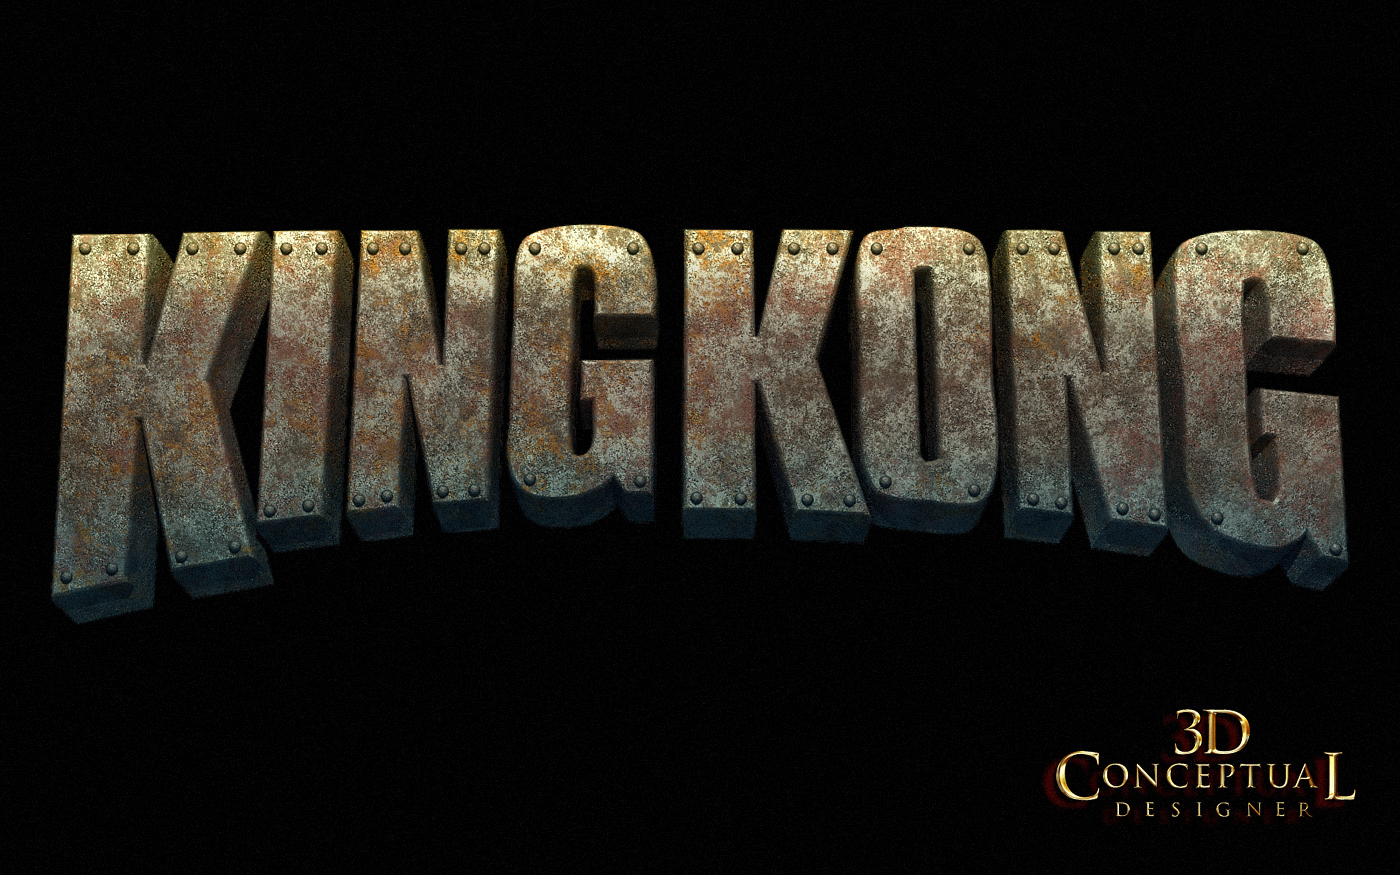 3DconceptualdesignerBlog: Project Review KING KONG[2005] 3D Logo Designs PART III